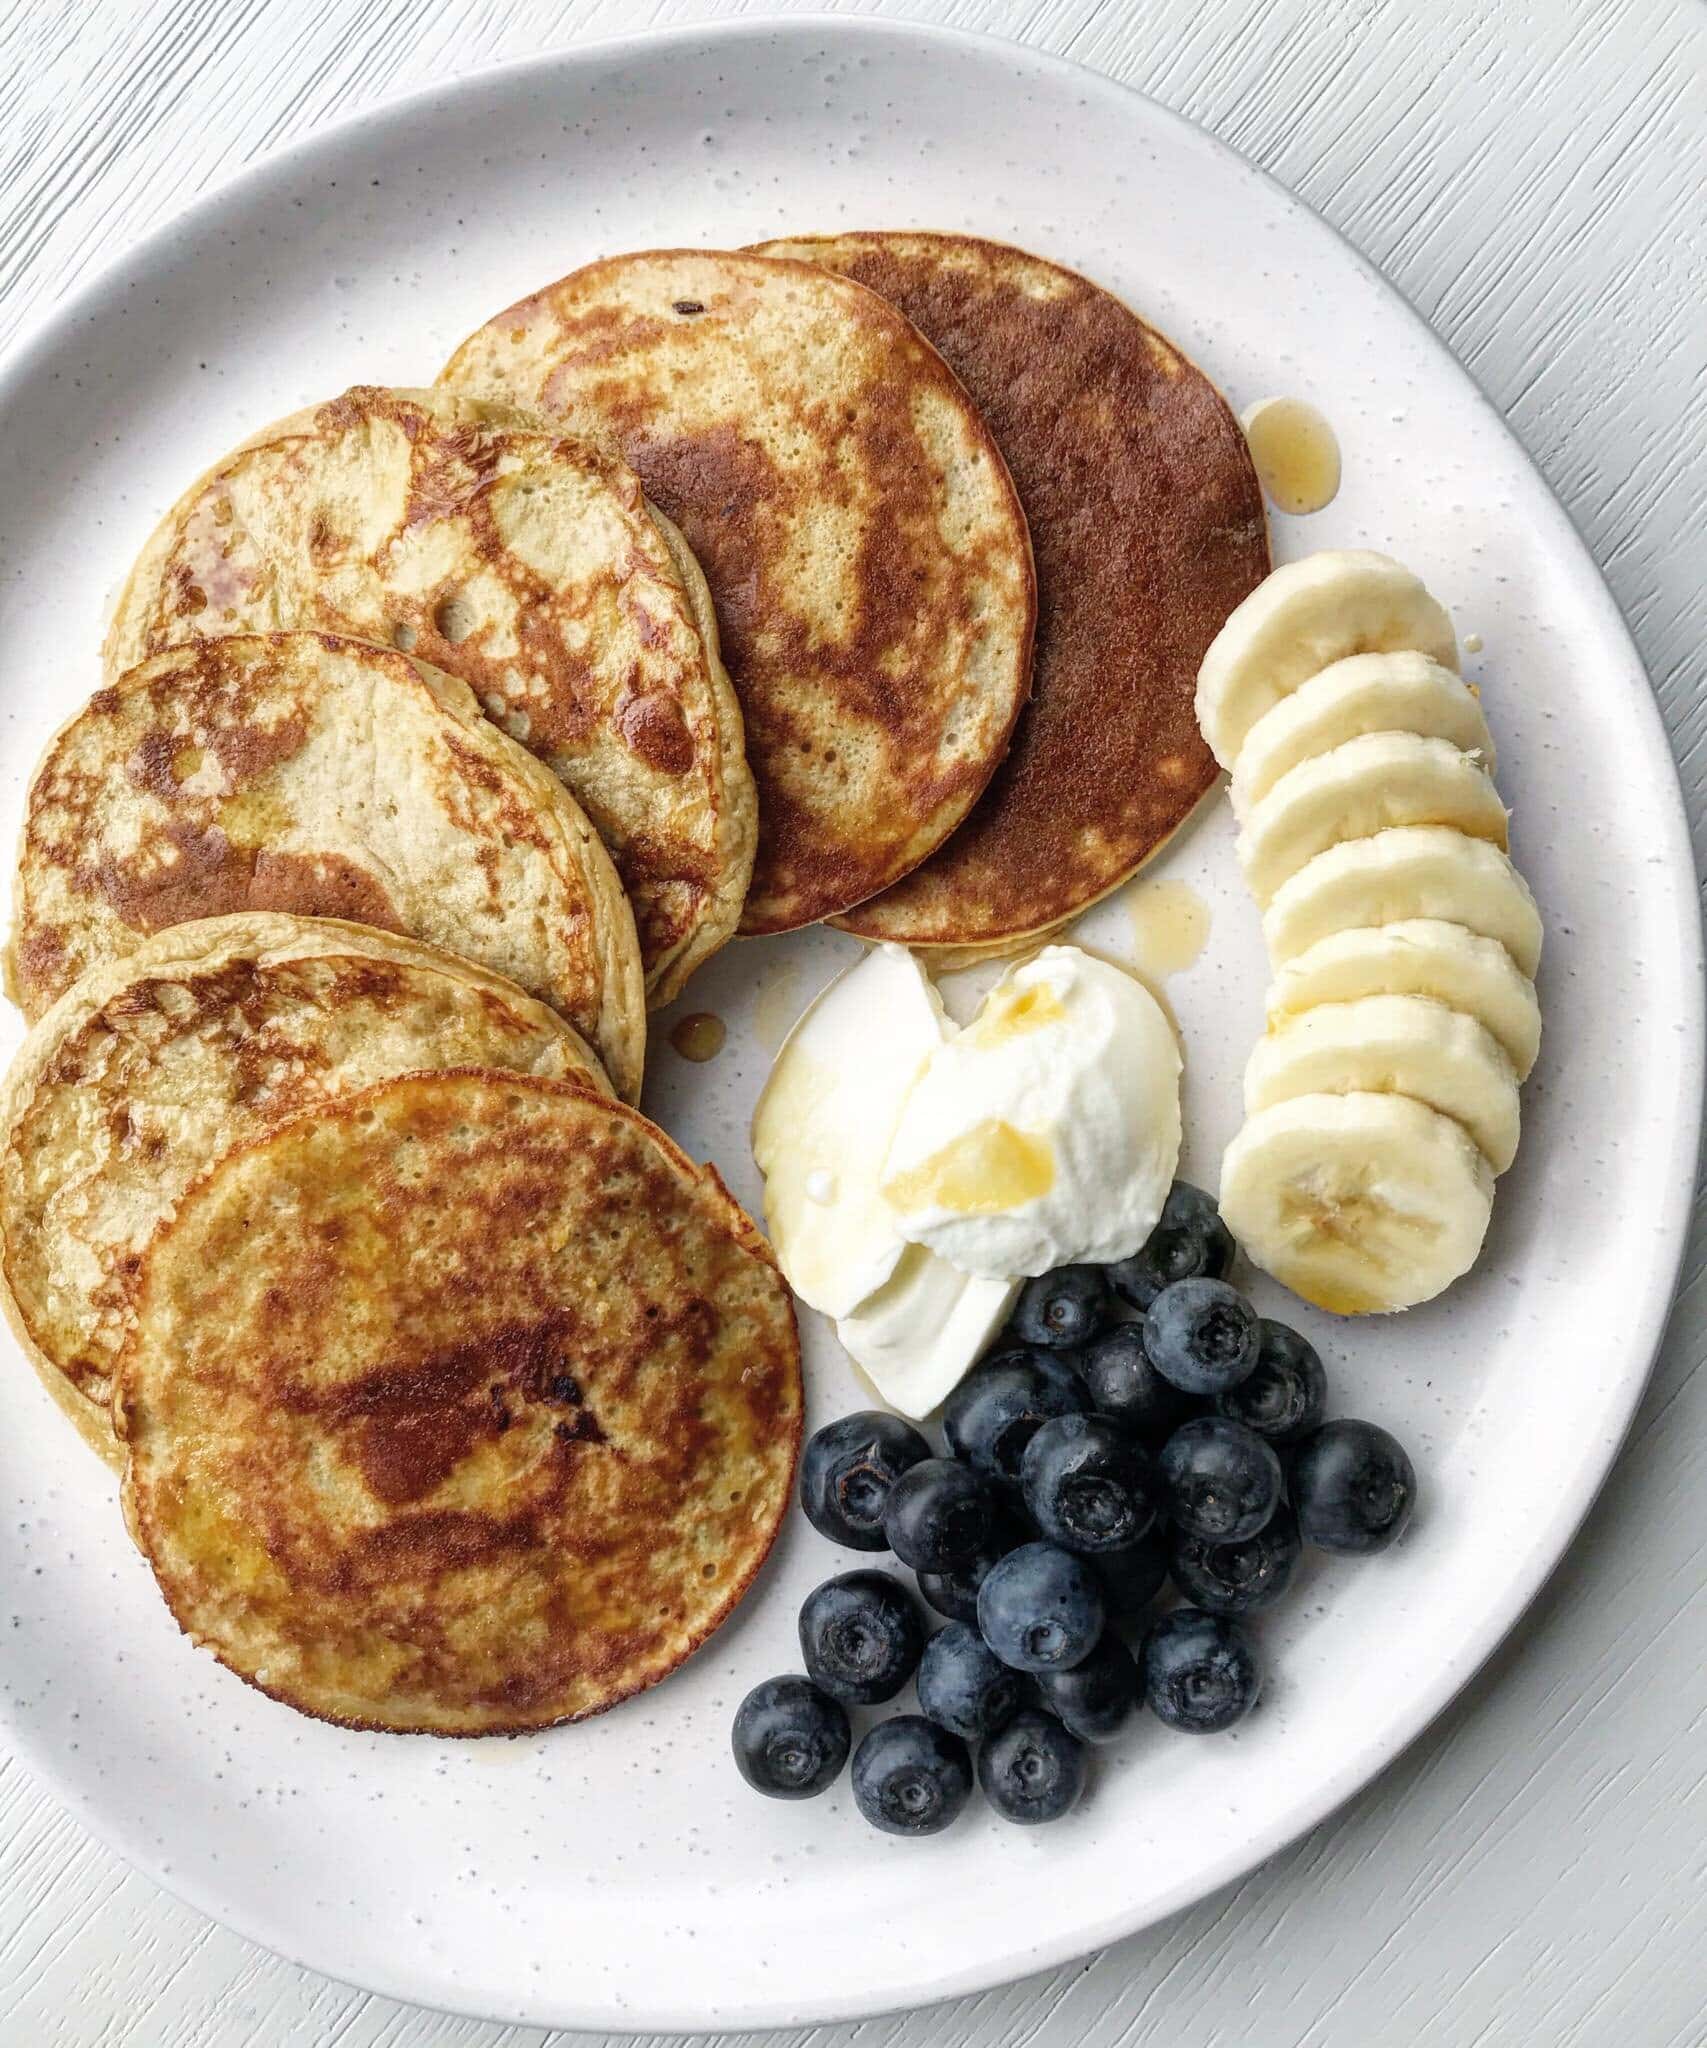 Banana Protein Powder Pancakes - The Healthy Maven